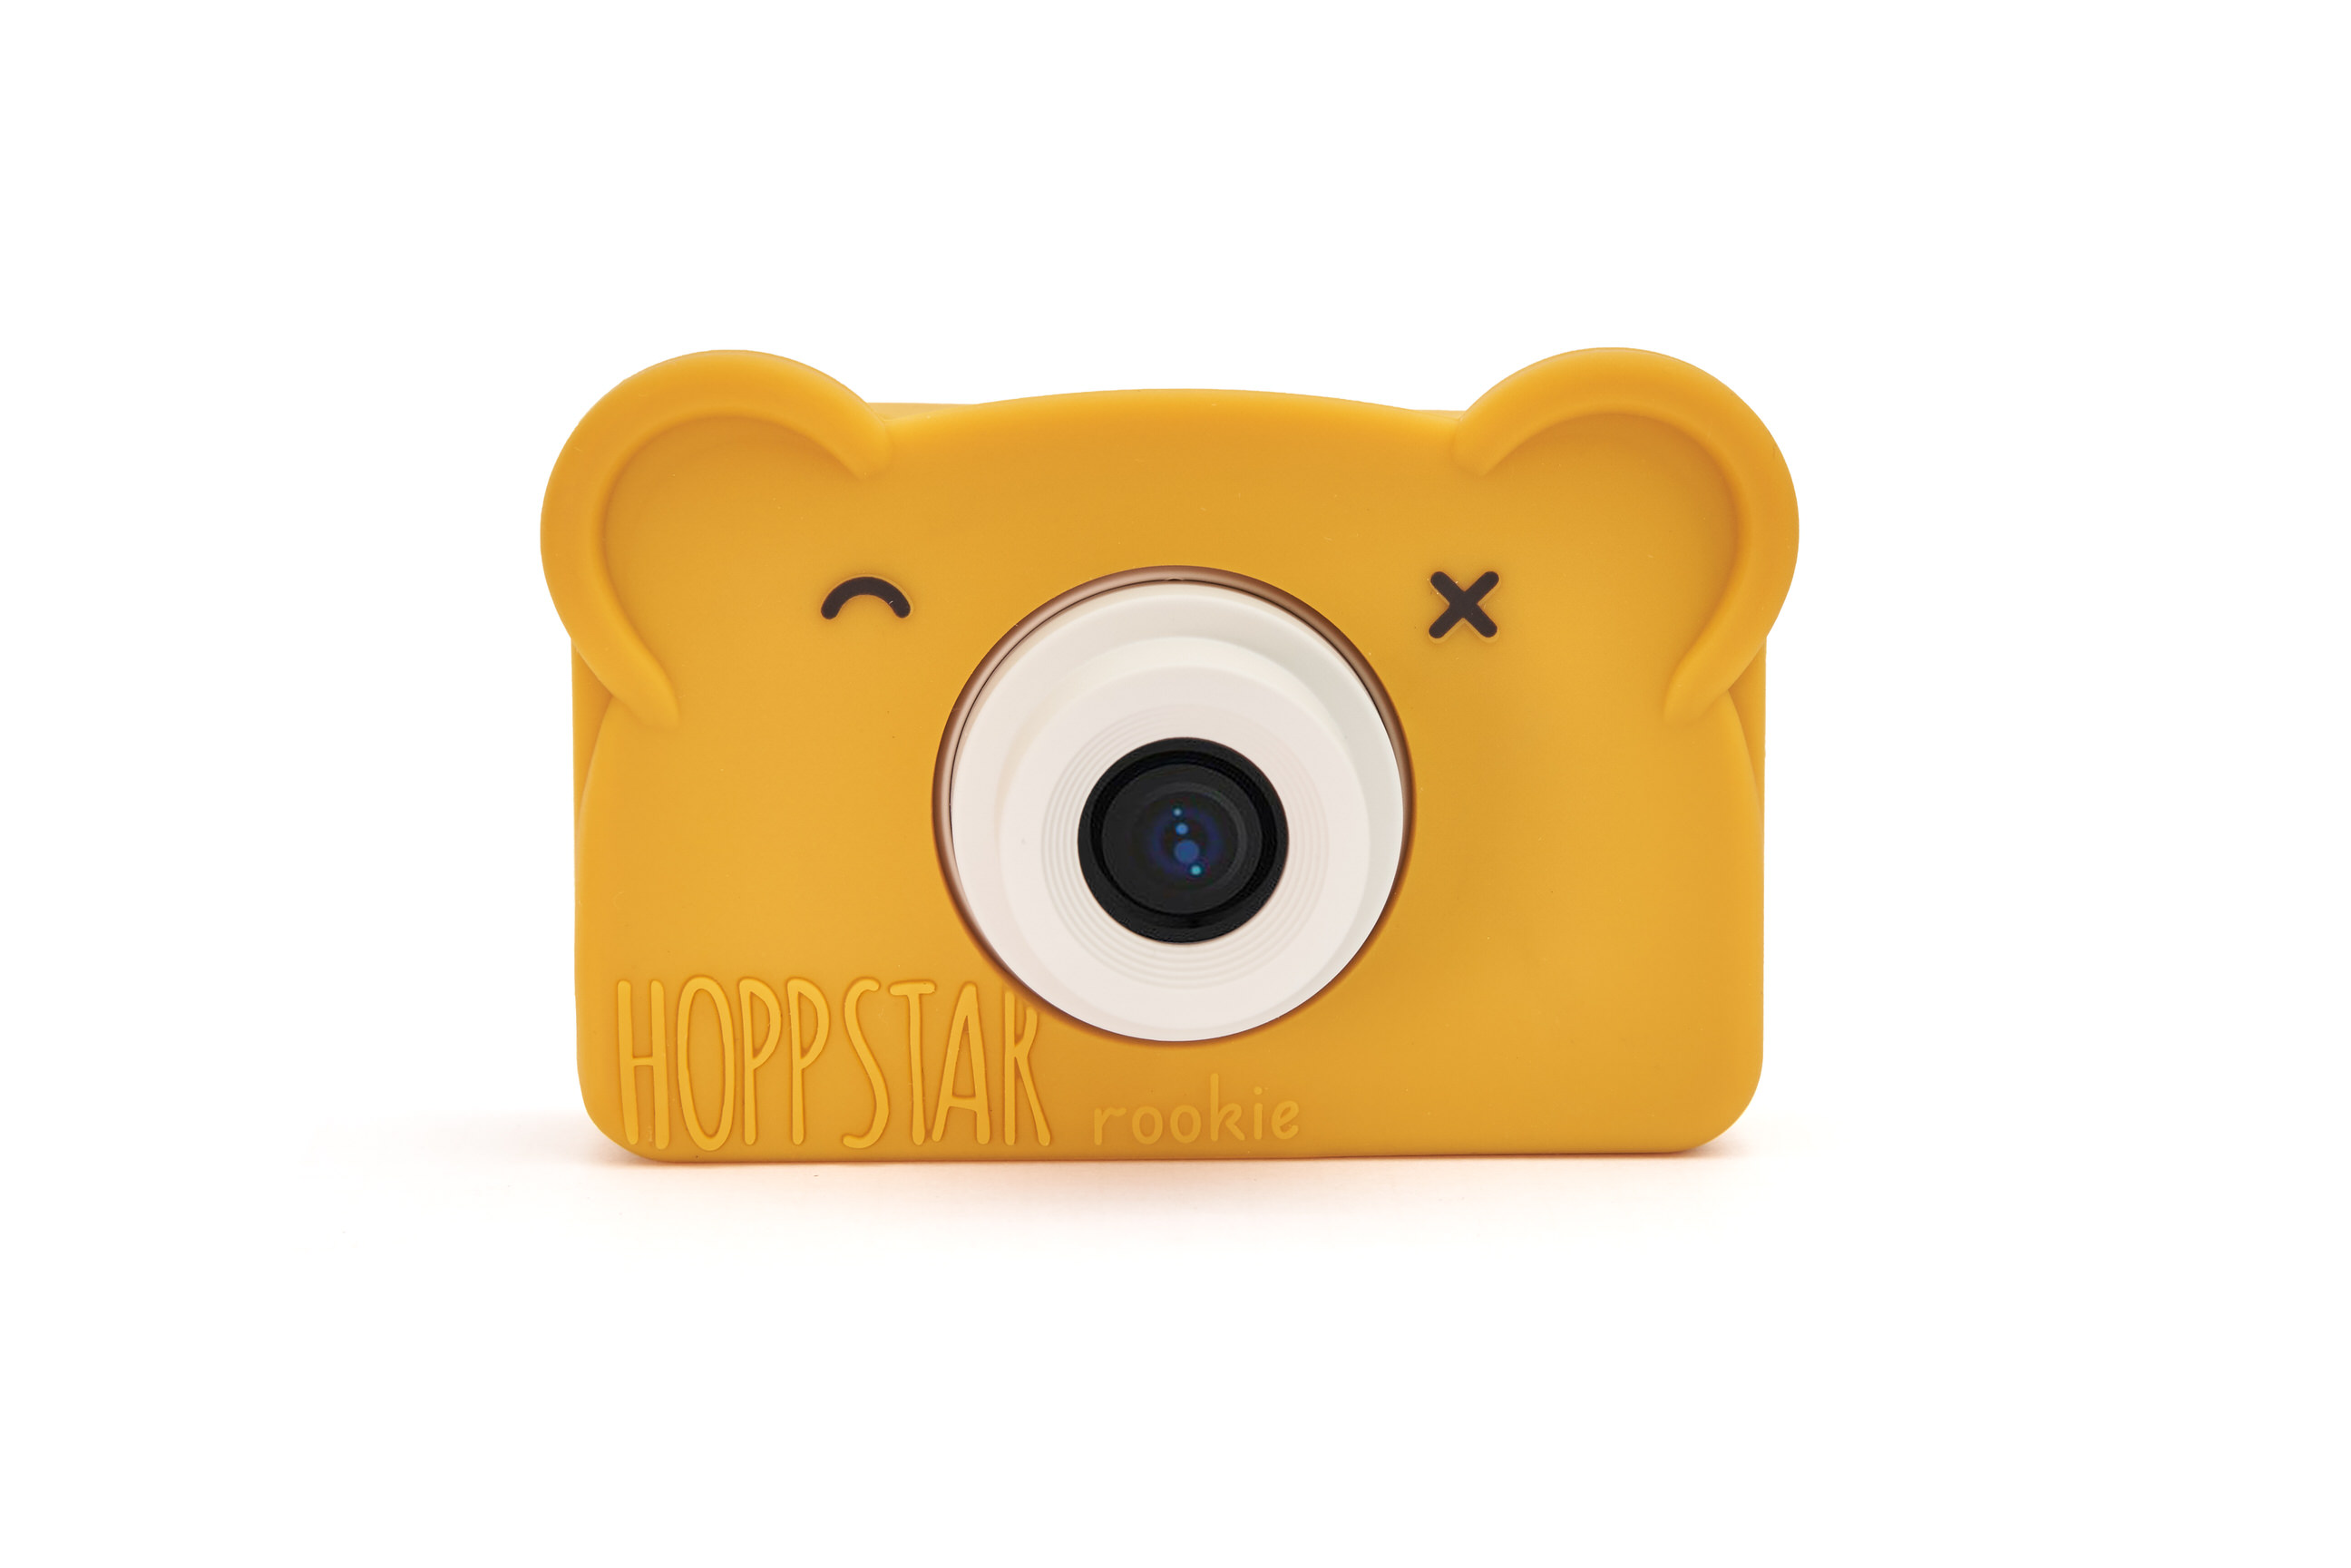 Hoppstar Rookie Kamera mit Bear Honey (Senfgelb) Silikobhülle, Frontalansicht